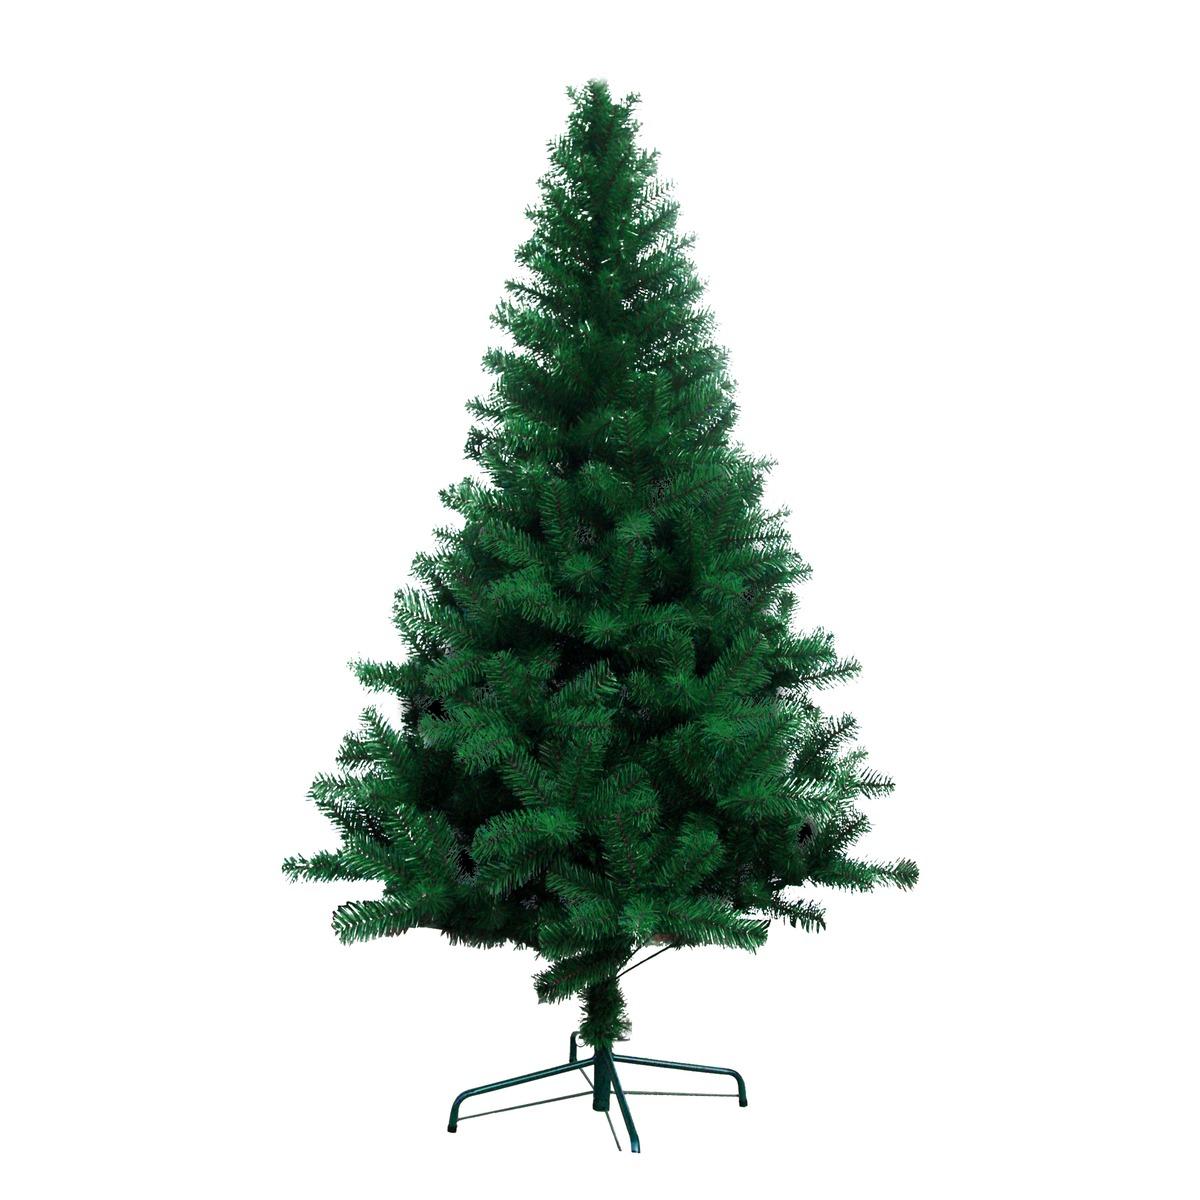 Sapin de Noël en plastique - Hauteur 180 cm - Vert